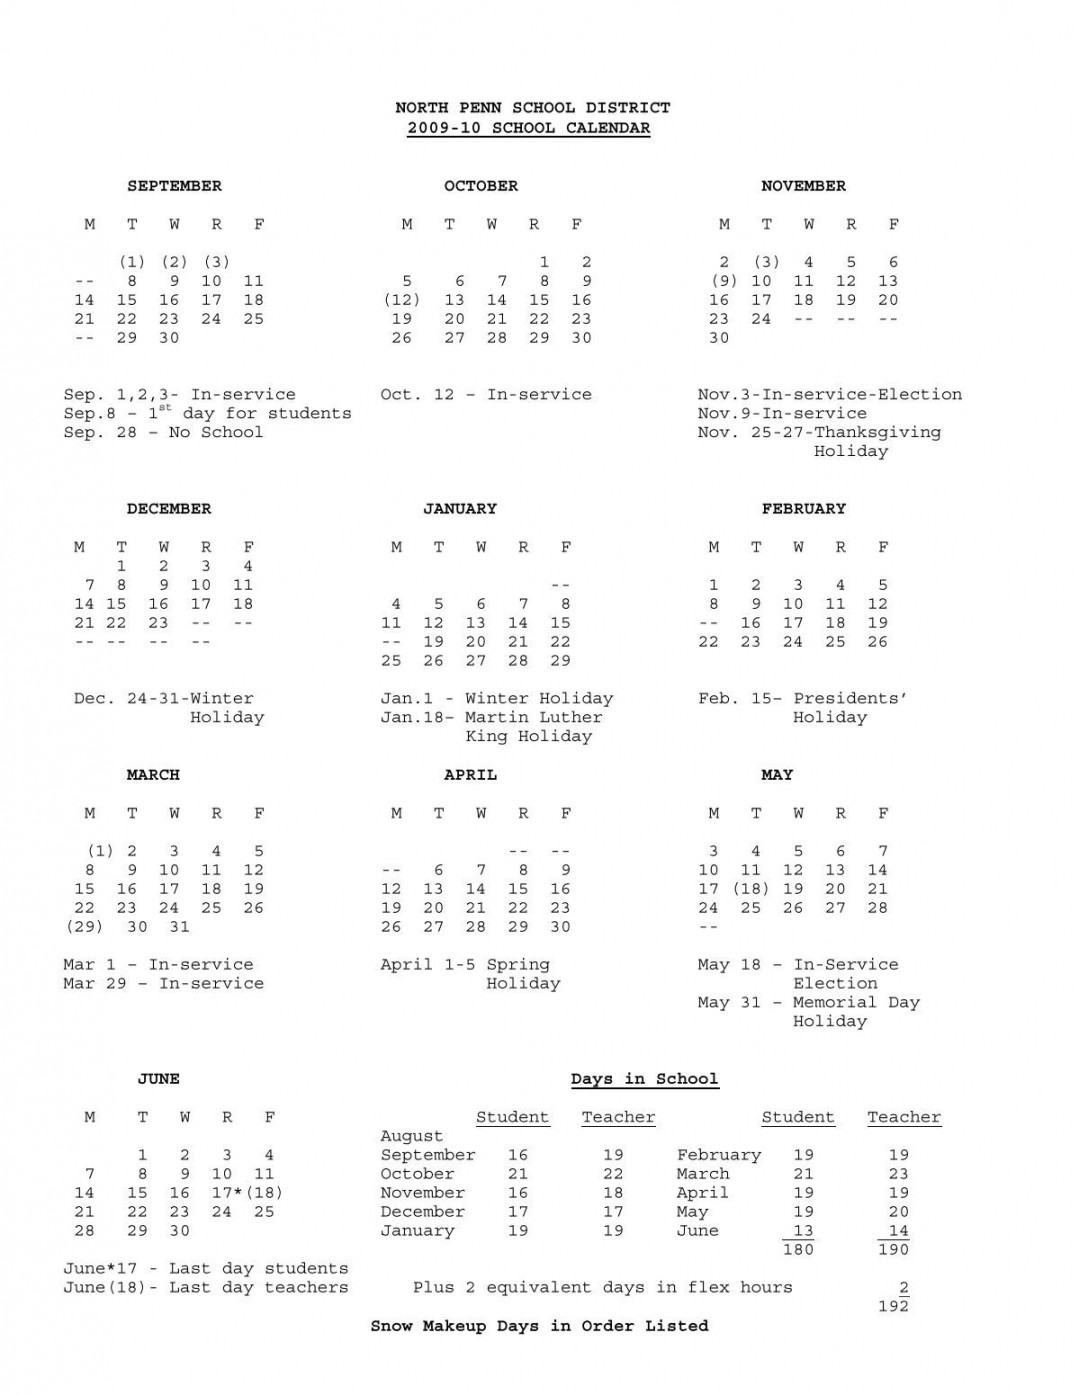 - Calendar Revised